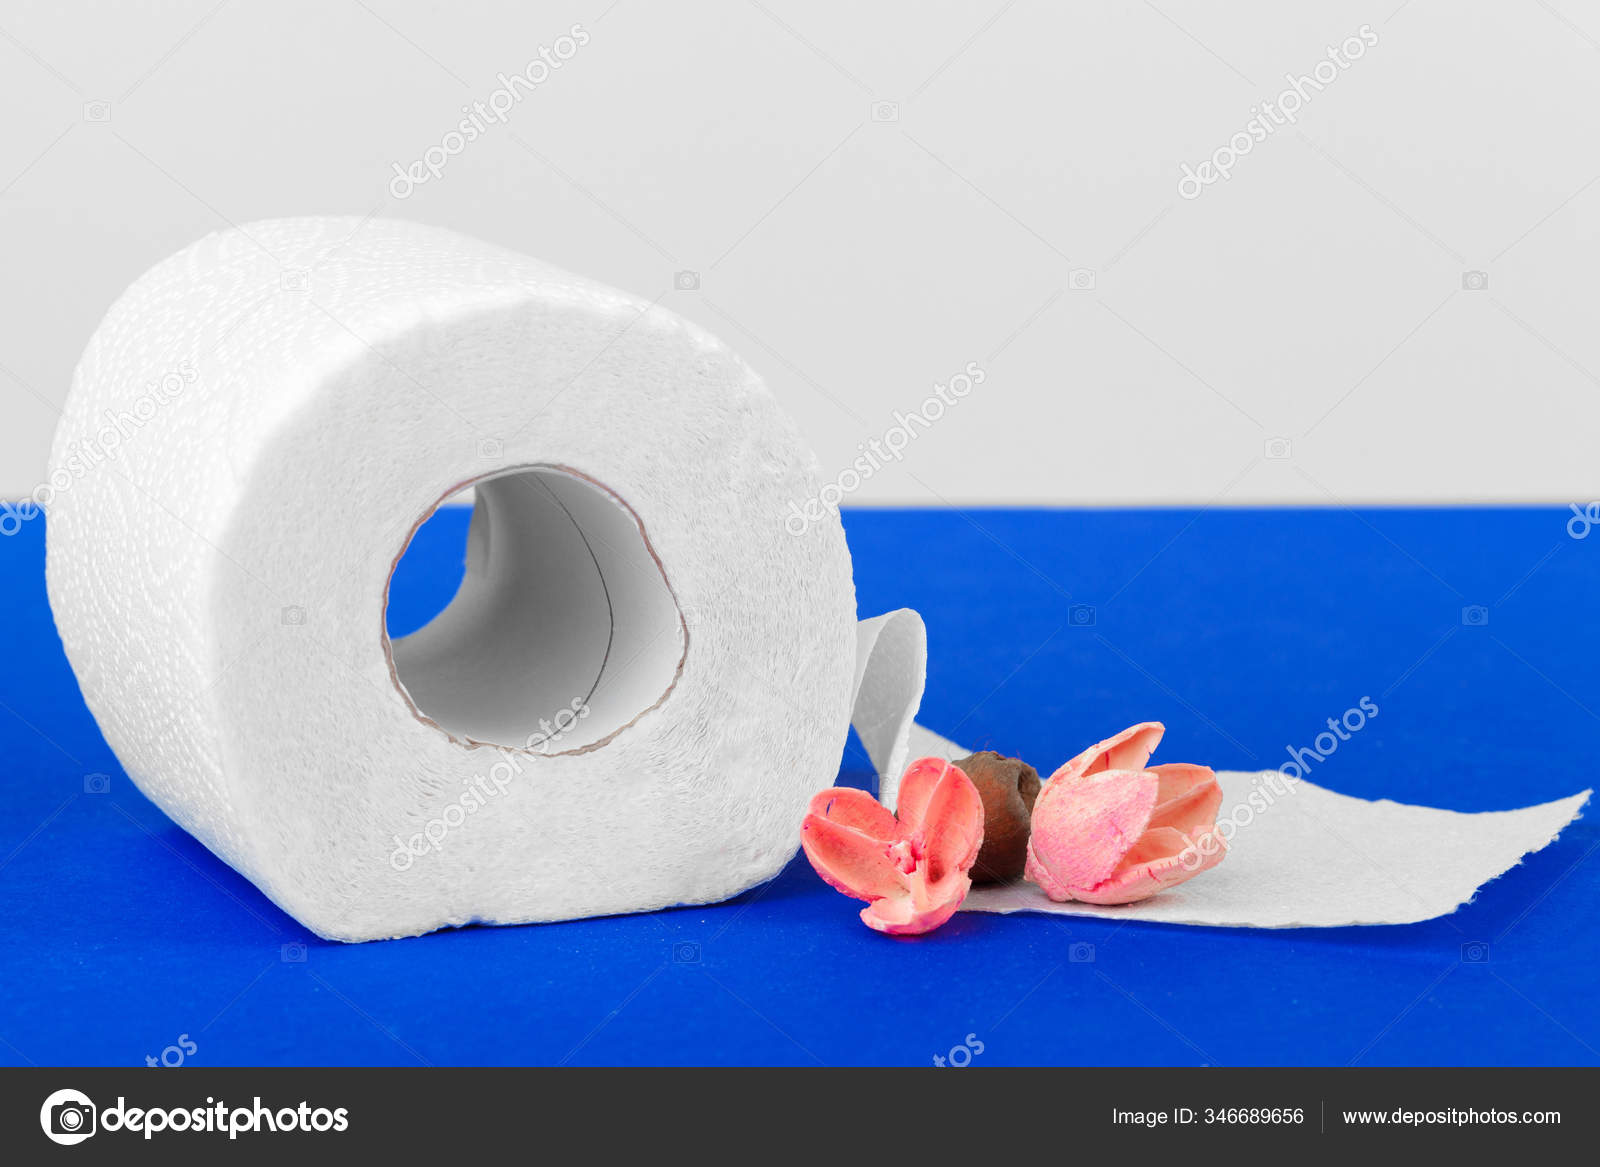 Pastel pink toilet paper rolls on black wooden background Stock